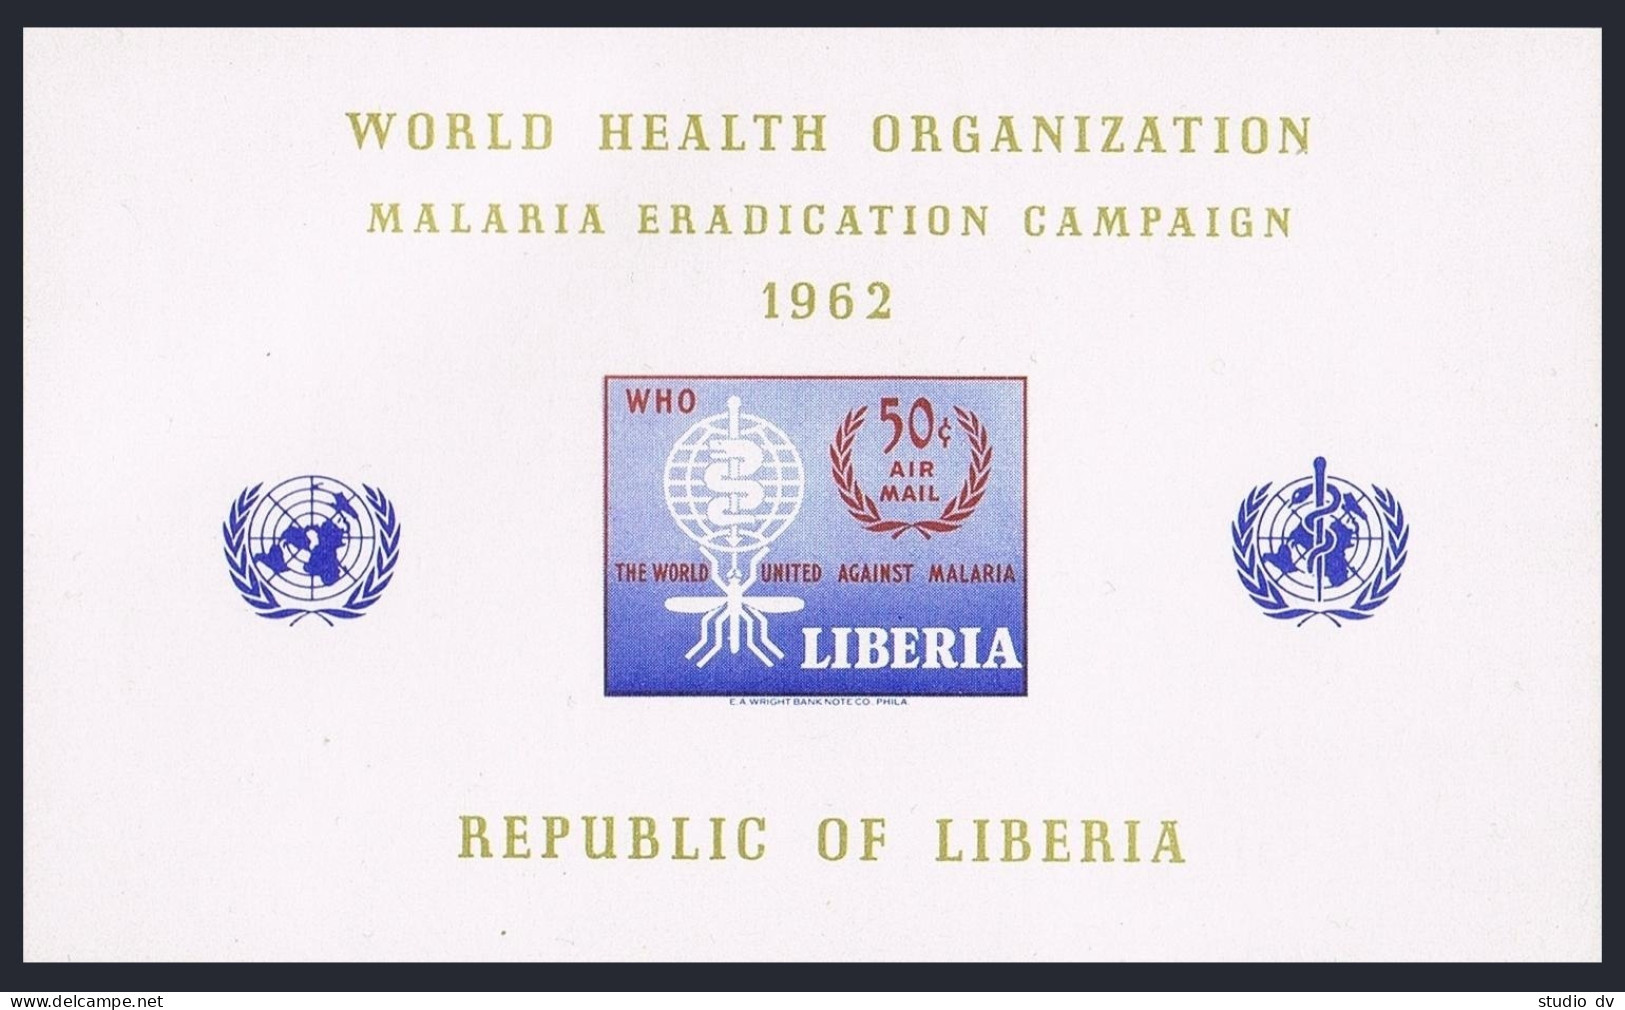 Liberia 402, C139-C140, MNH. Mi 581-582, Bl.24. WHO Drive To Eradicate Malaria. - Liberia